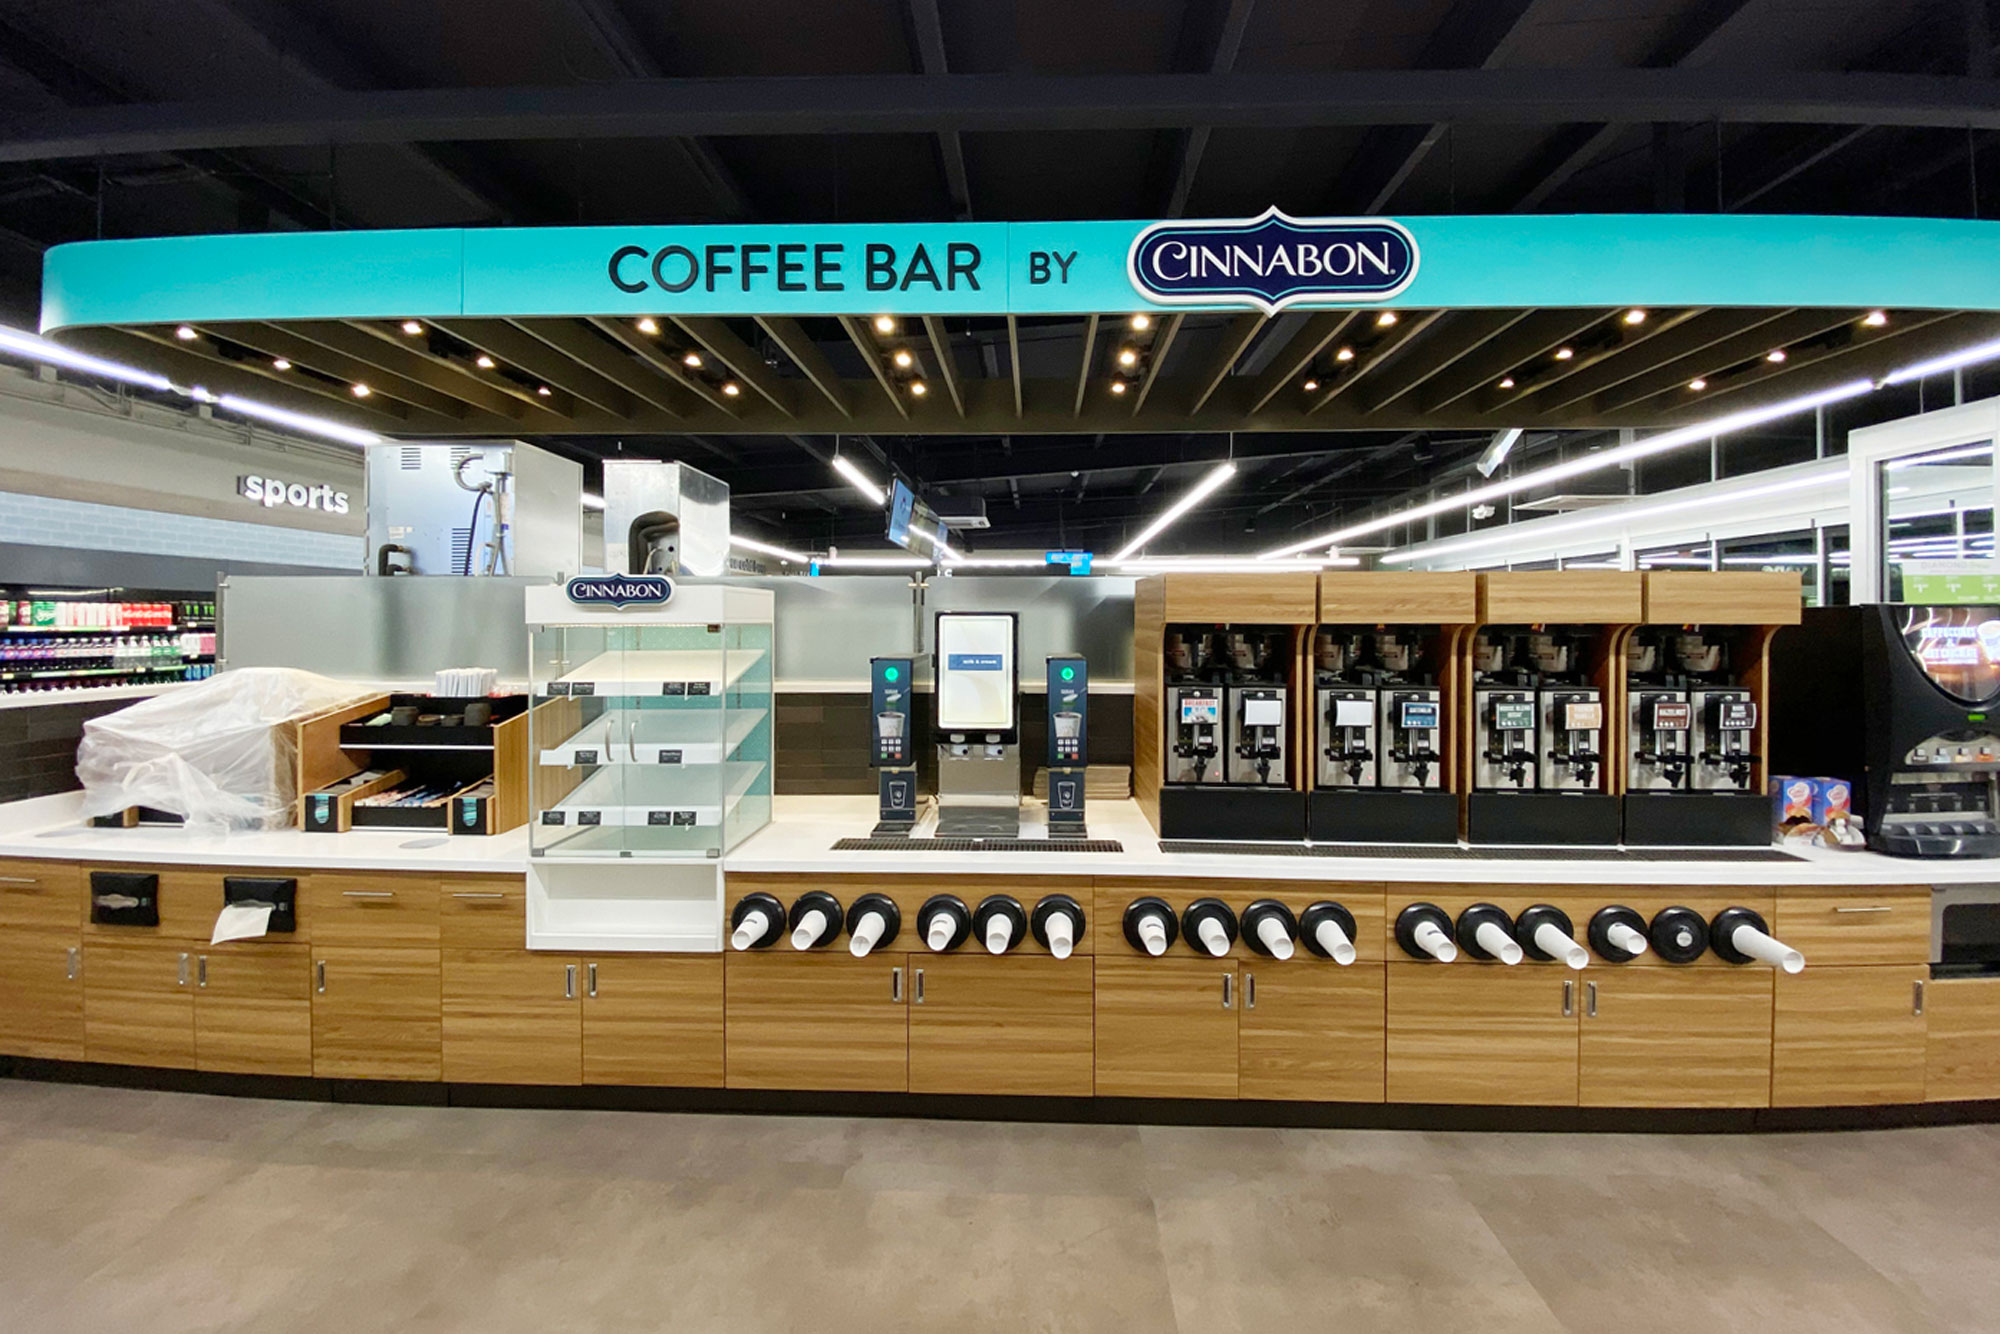 Cinnabon branded coffee bar